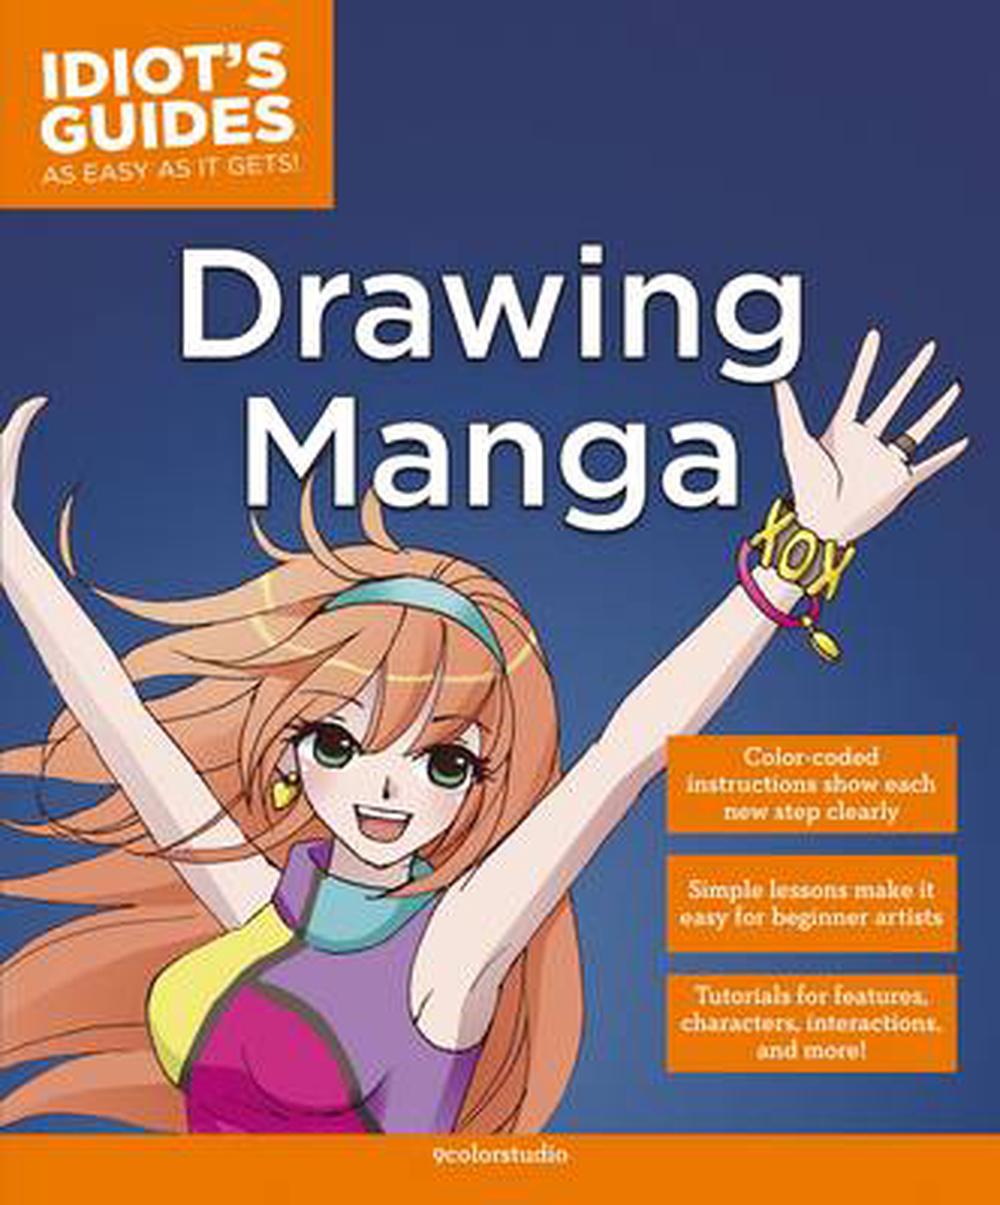 Drawing Manga by 9colorstudio, Paperback, 9781615644155 Buy online at